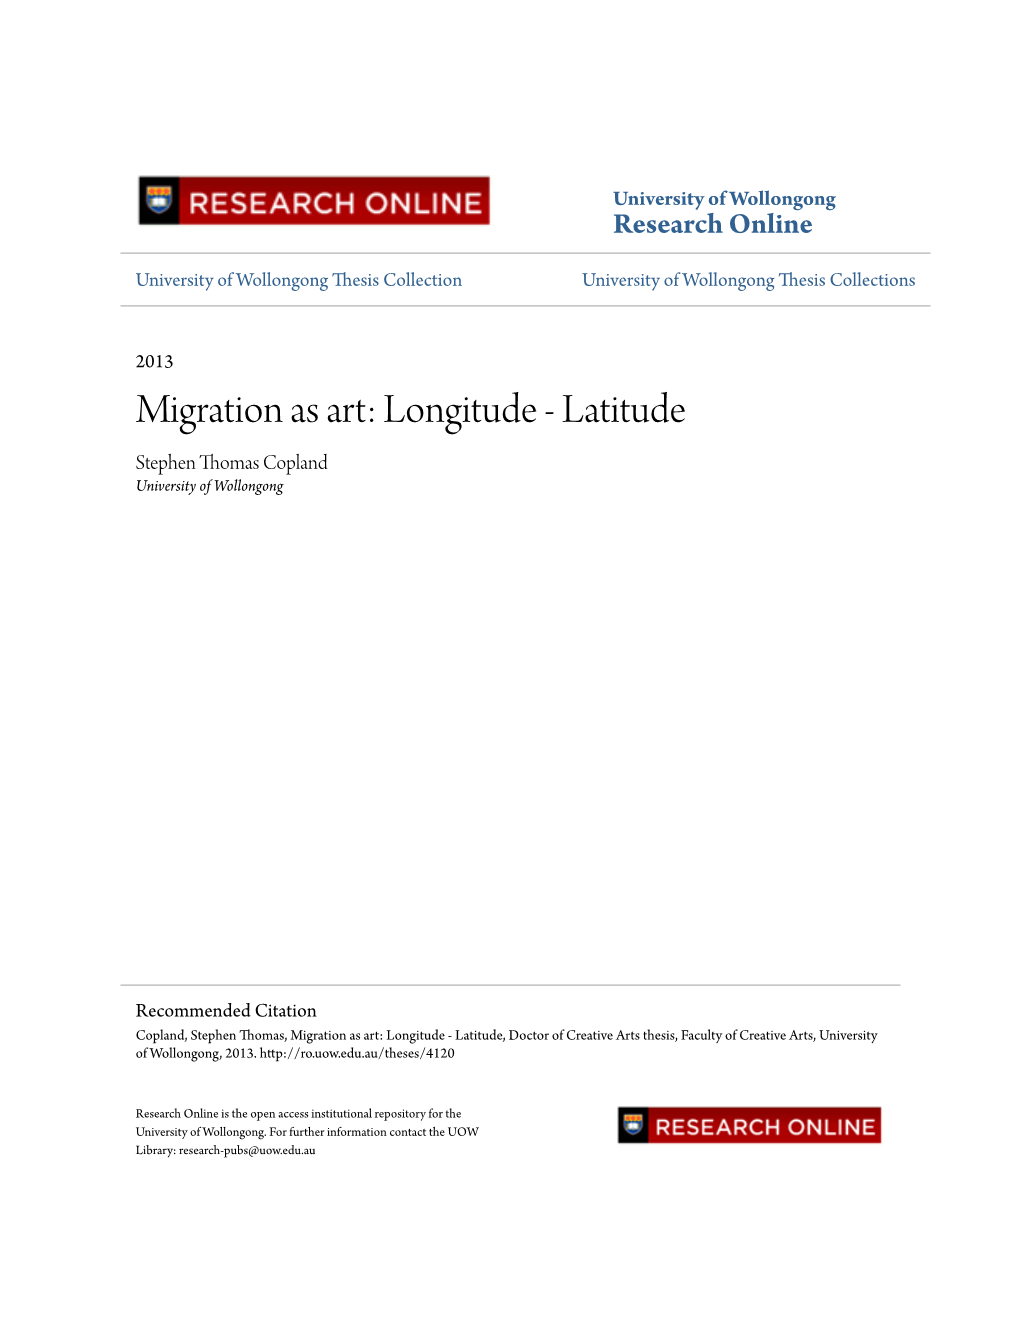 Migration As Art: Longitude - Latitude Stephen Thomas Copland University of Wollongong